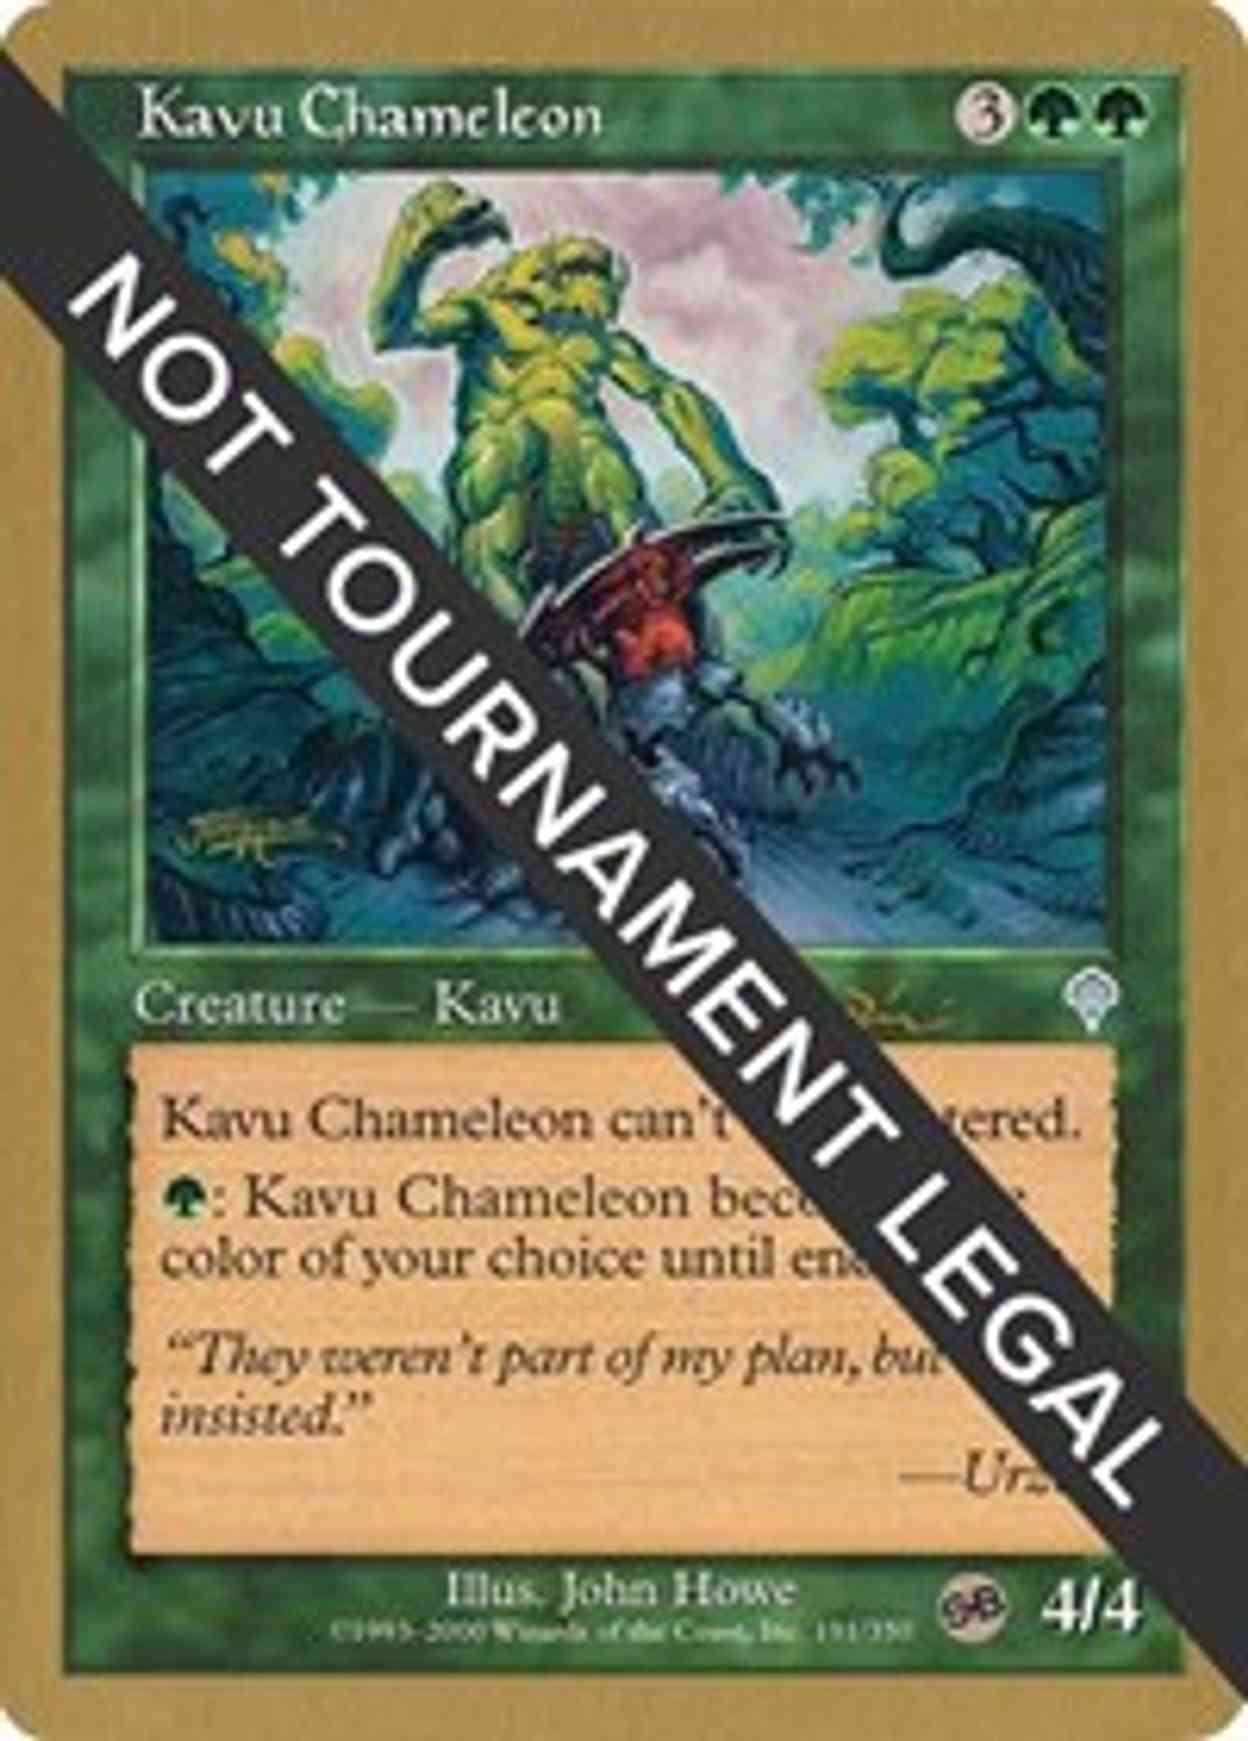 Kavu Chameleon - 2001 Jan Tomcani (INV) (SB) magic card front